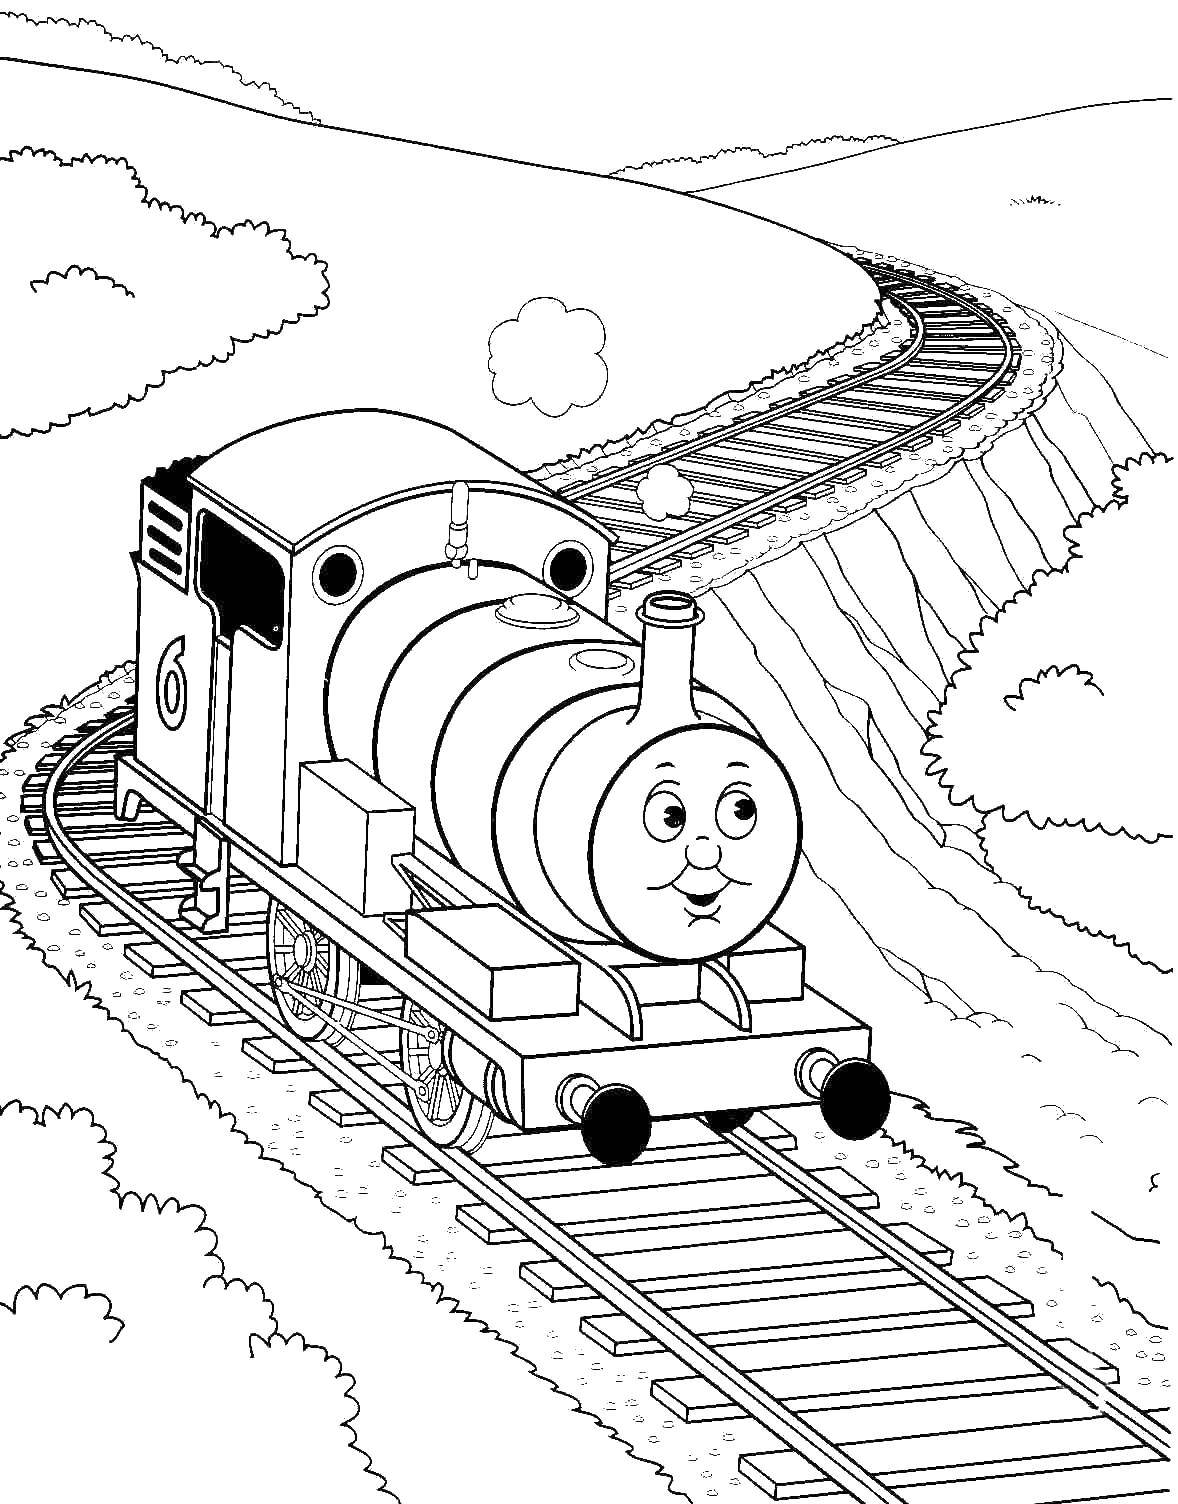 Coloring Thomas the tank engine. Category cartoons. Tags:  locomotive, Thomas.